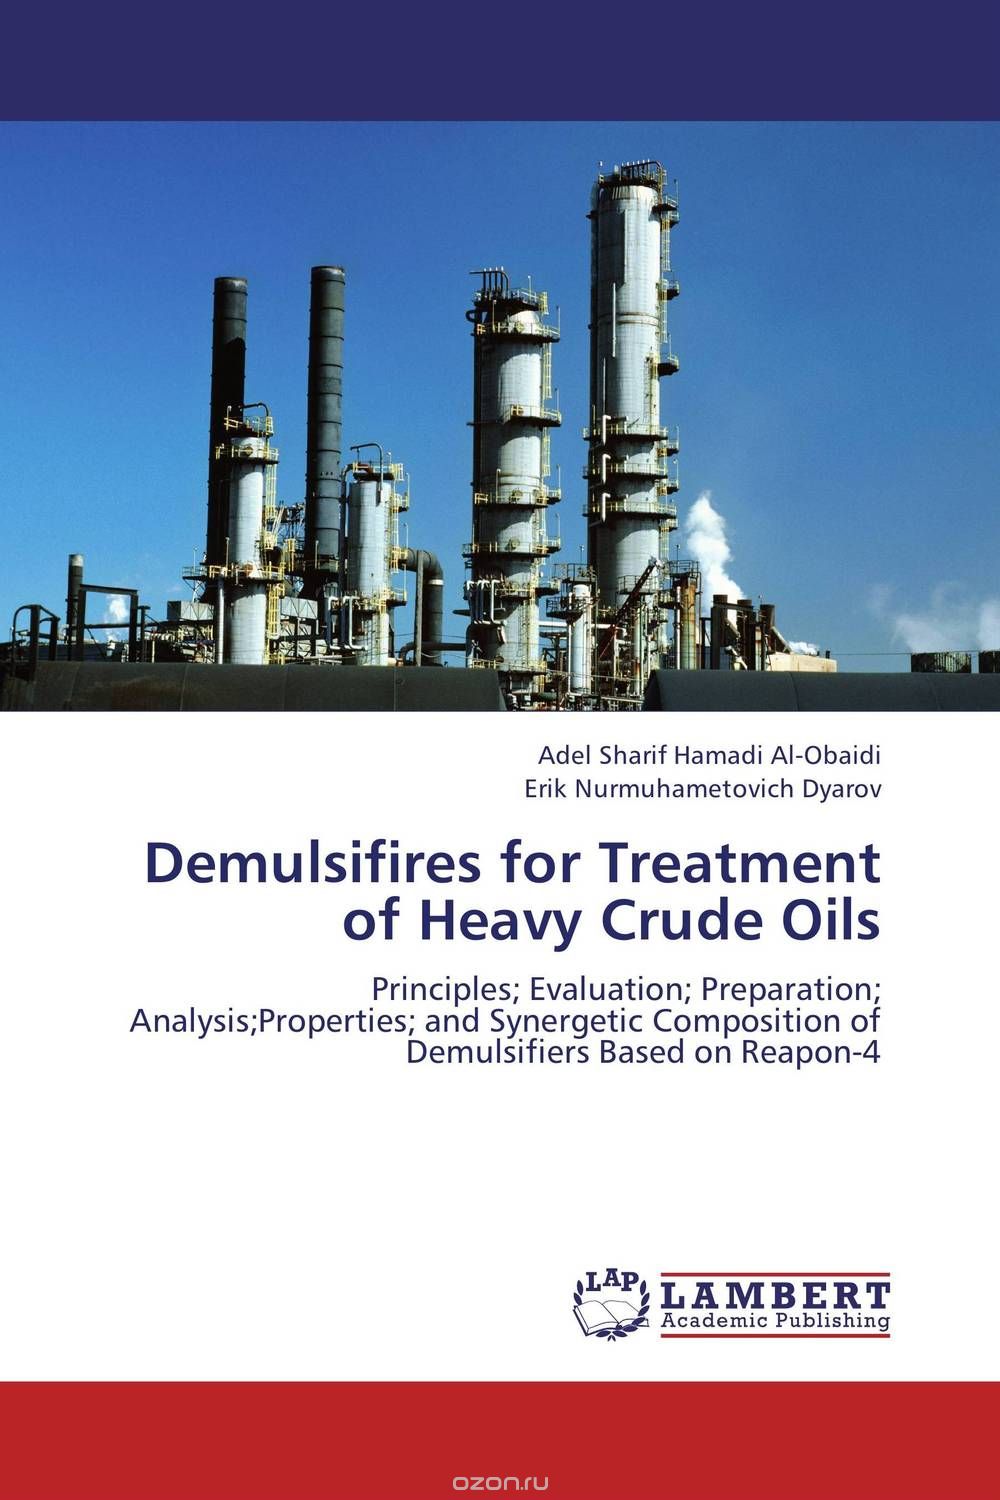 Скачать книгу "Demulsifires for Treatment of Heavy Crude Oils"